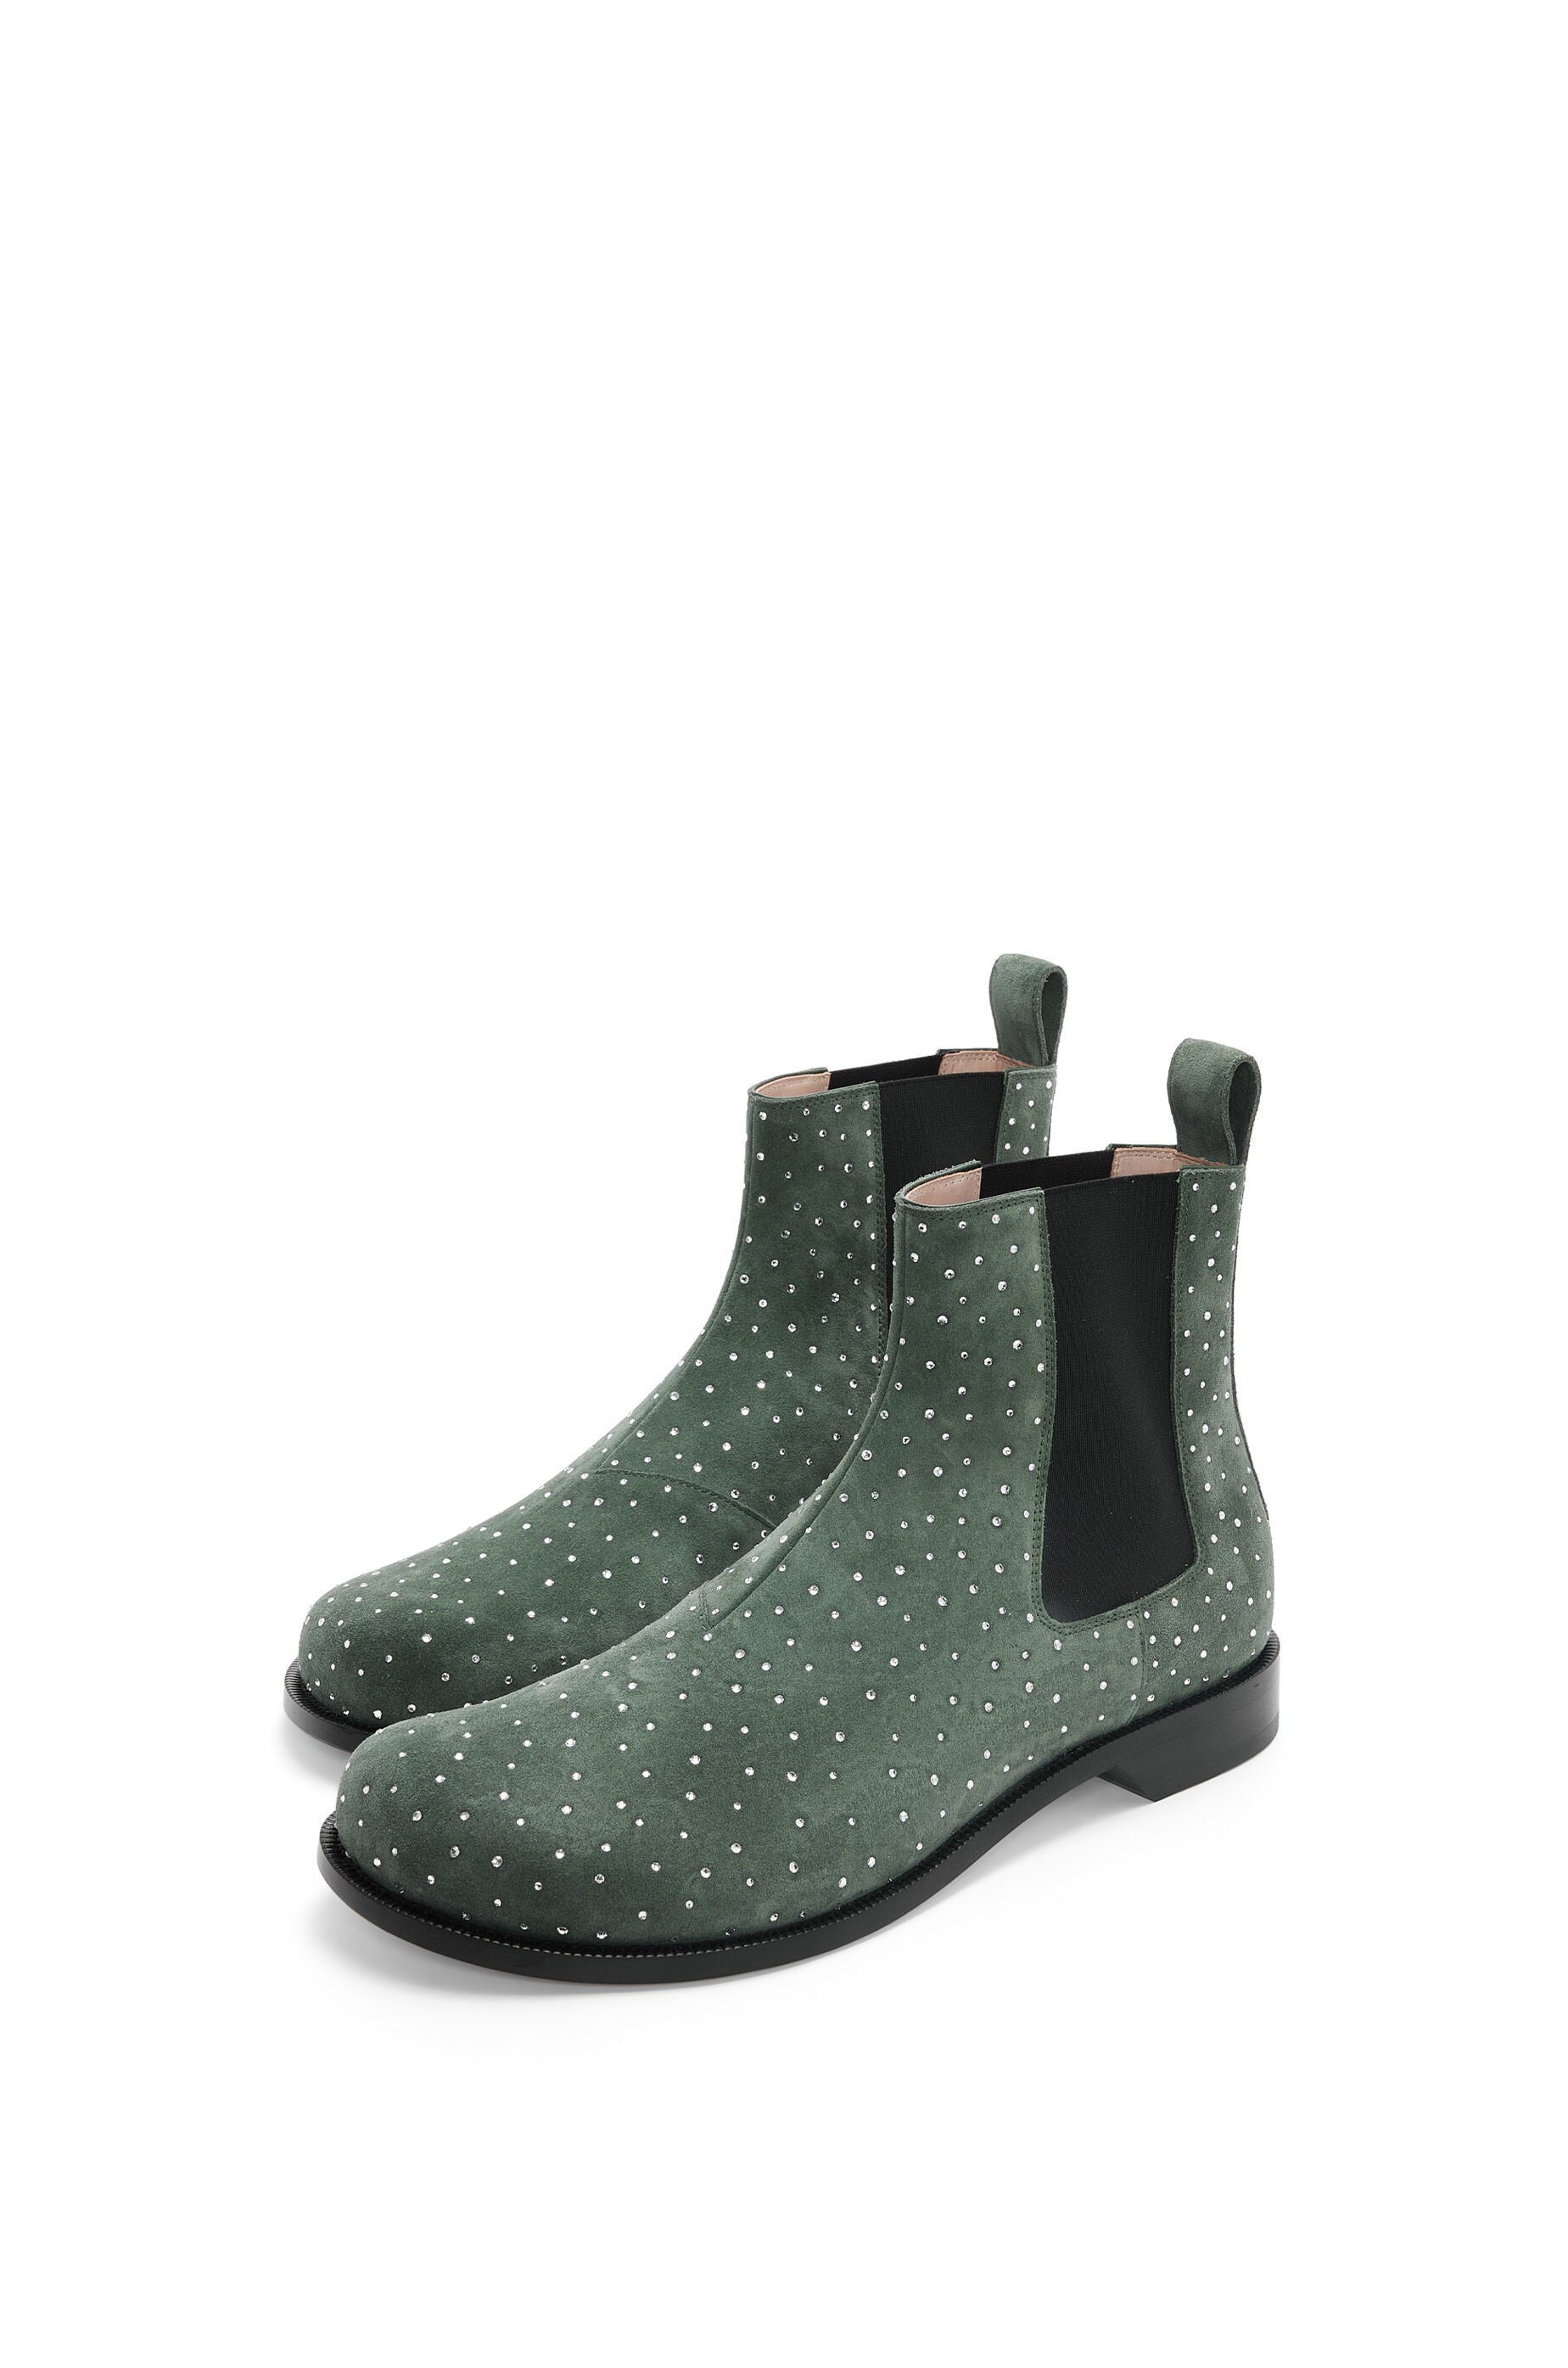 Men Designer Boots | Collection of Luxury Boots | Loewe - LOEWE